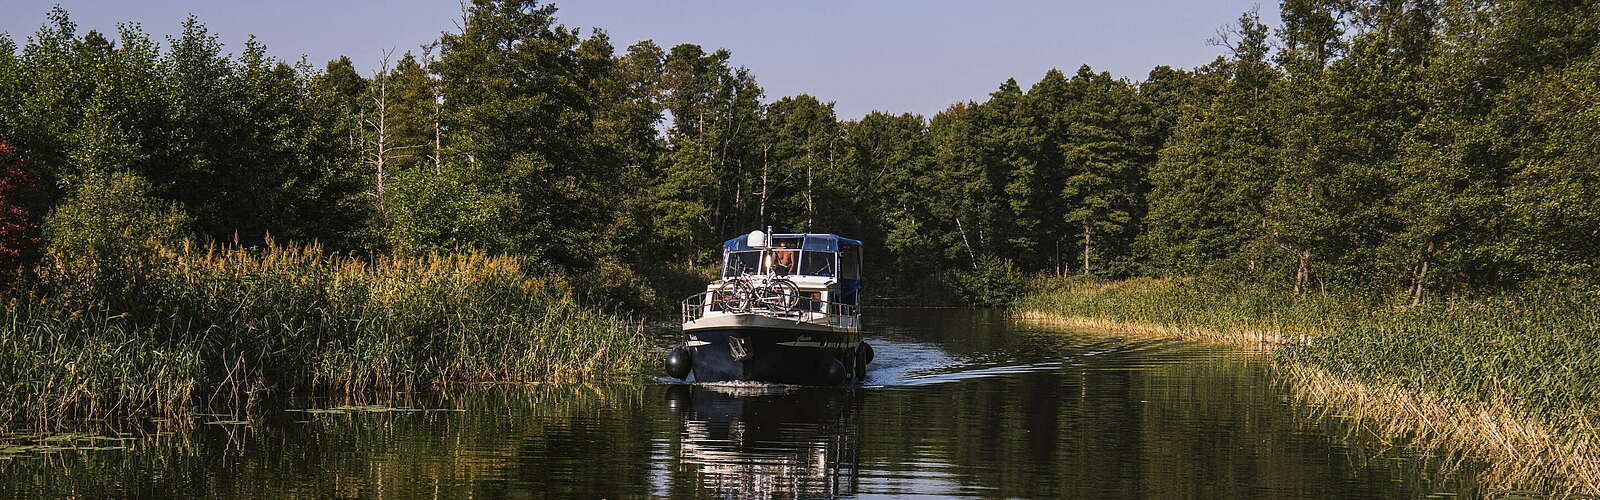 Hausboot in der Wasserlandschaft,
        
    

        Foto: TMB-Fotoarchiv/Madlen Krippendorf